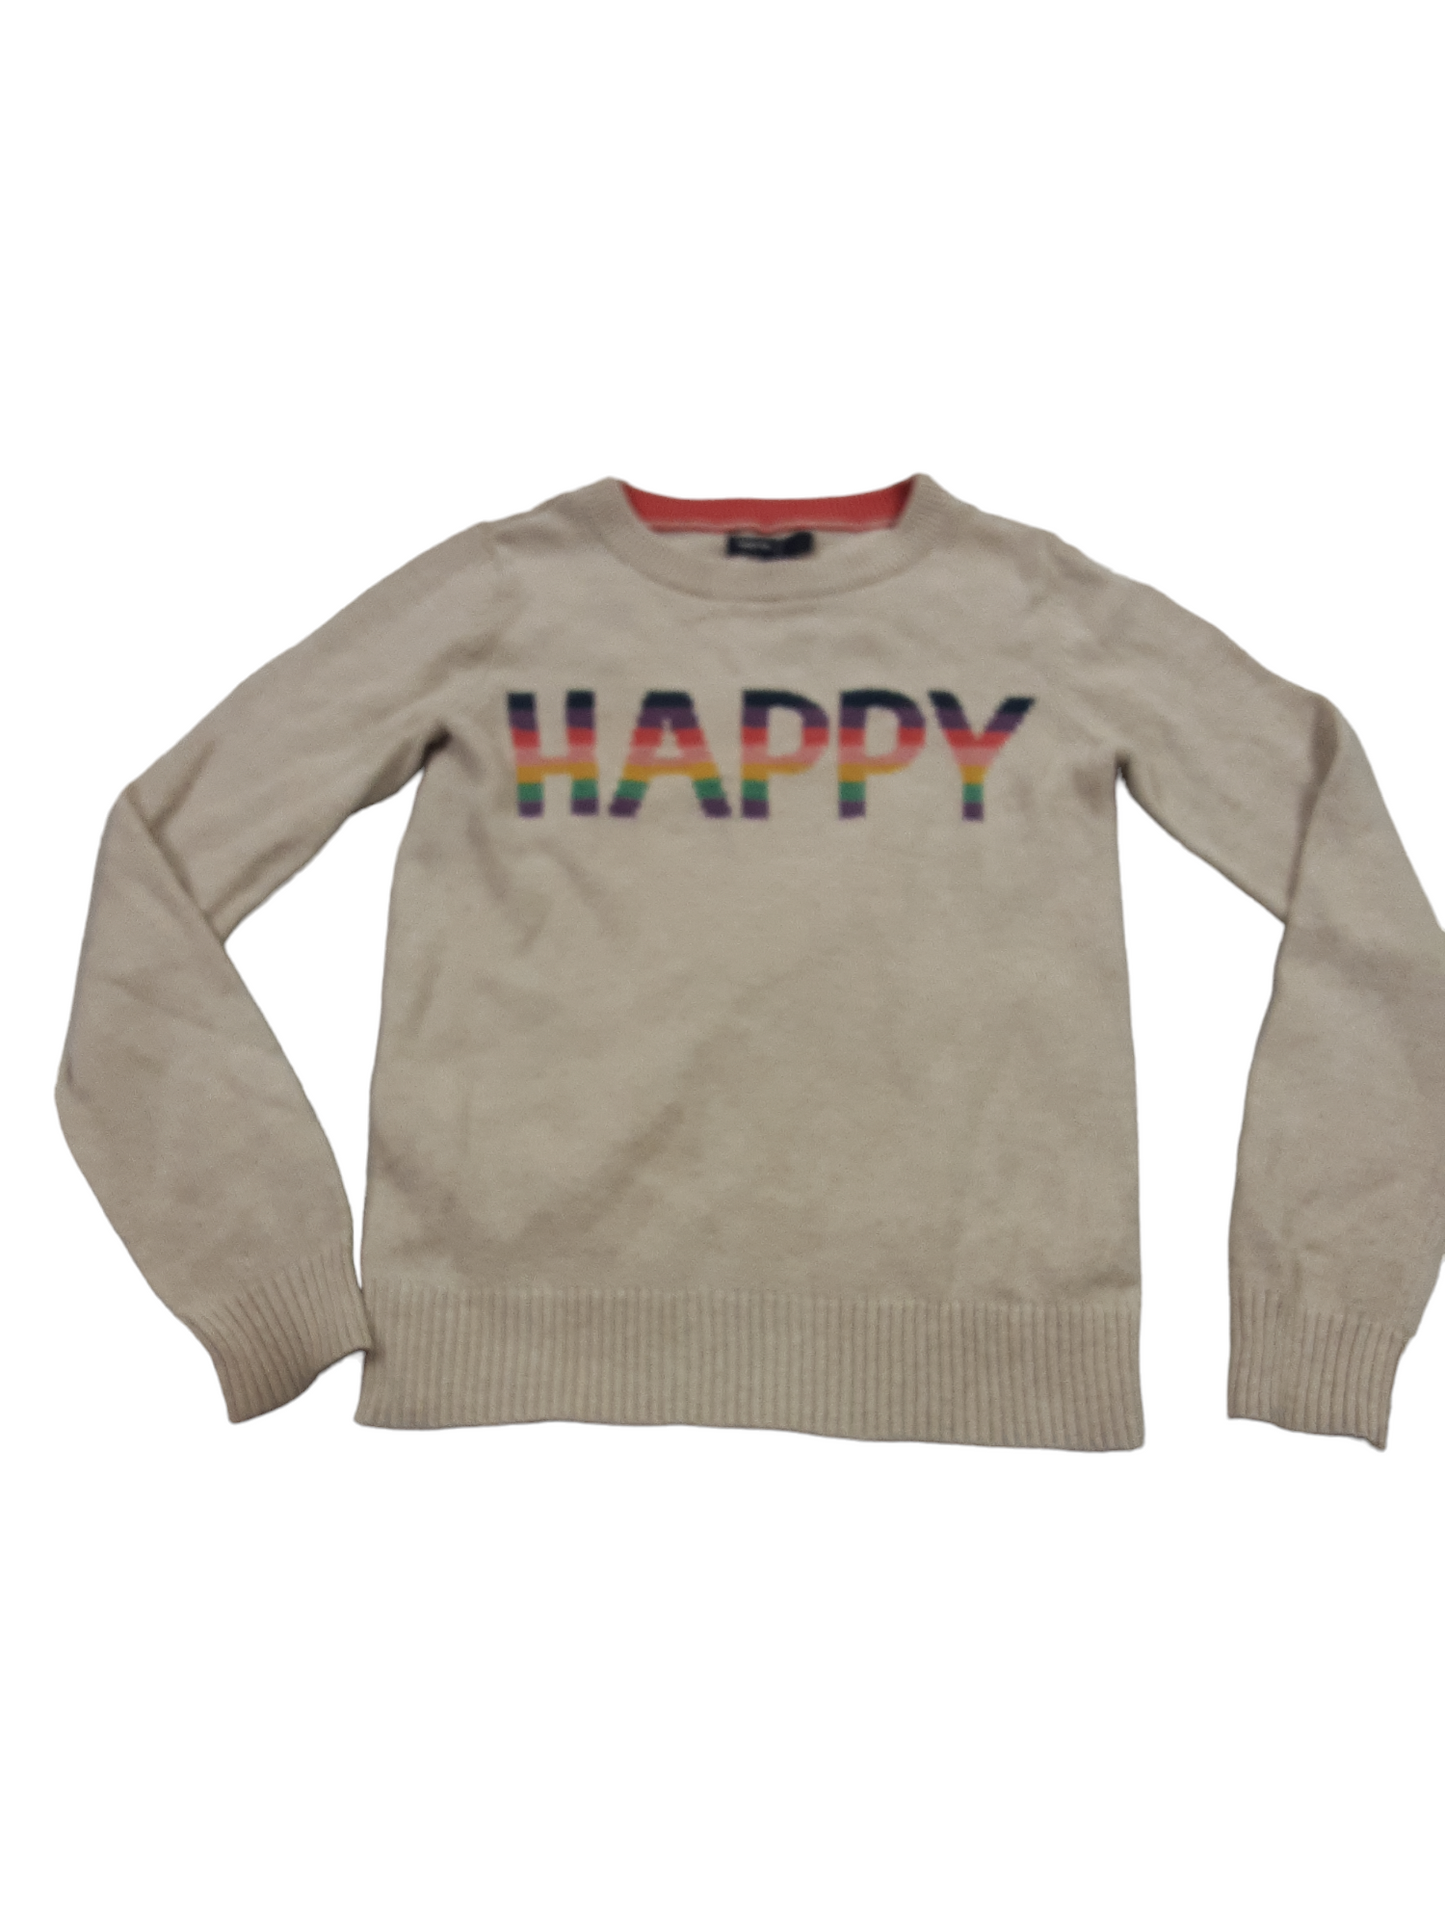 Happy knit sweater size 8